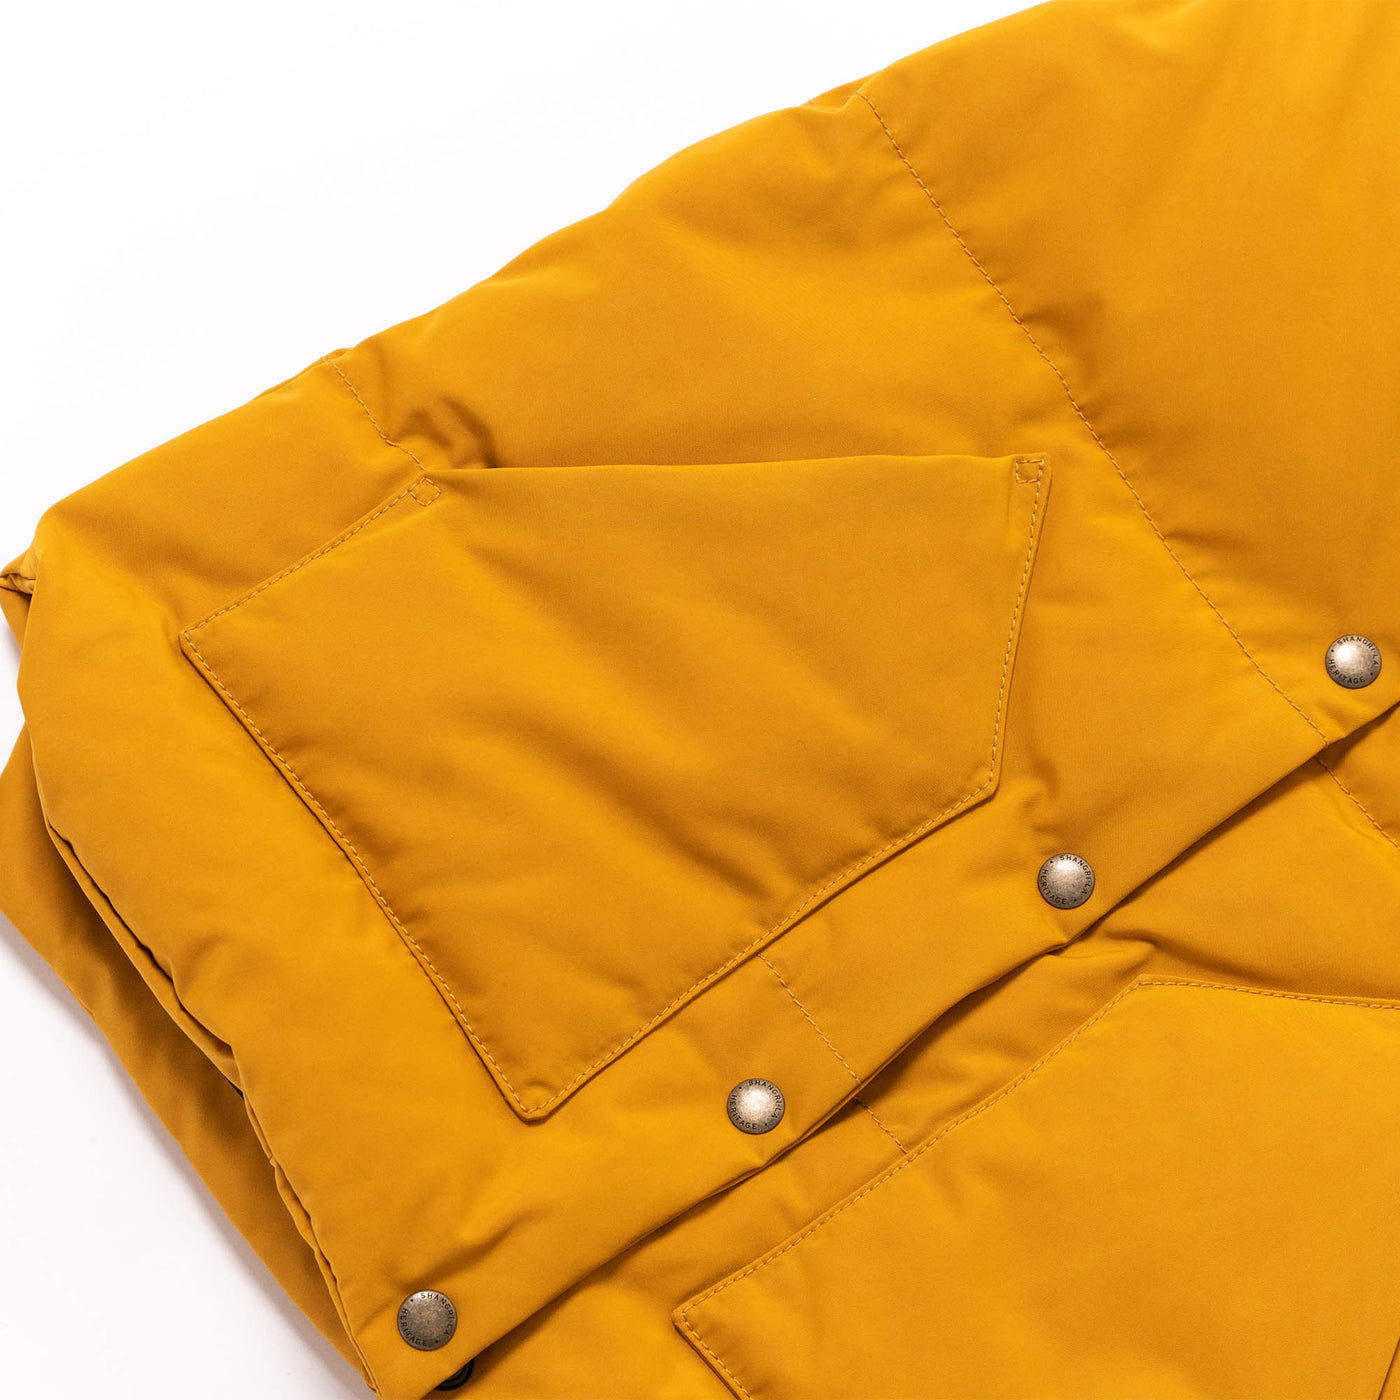 Shangri-La Women's Down Vest Bivacco Yellow